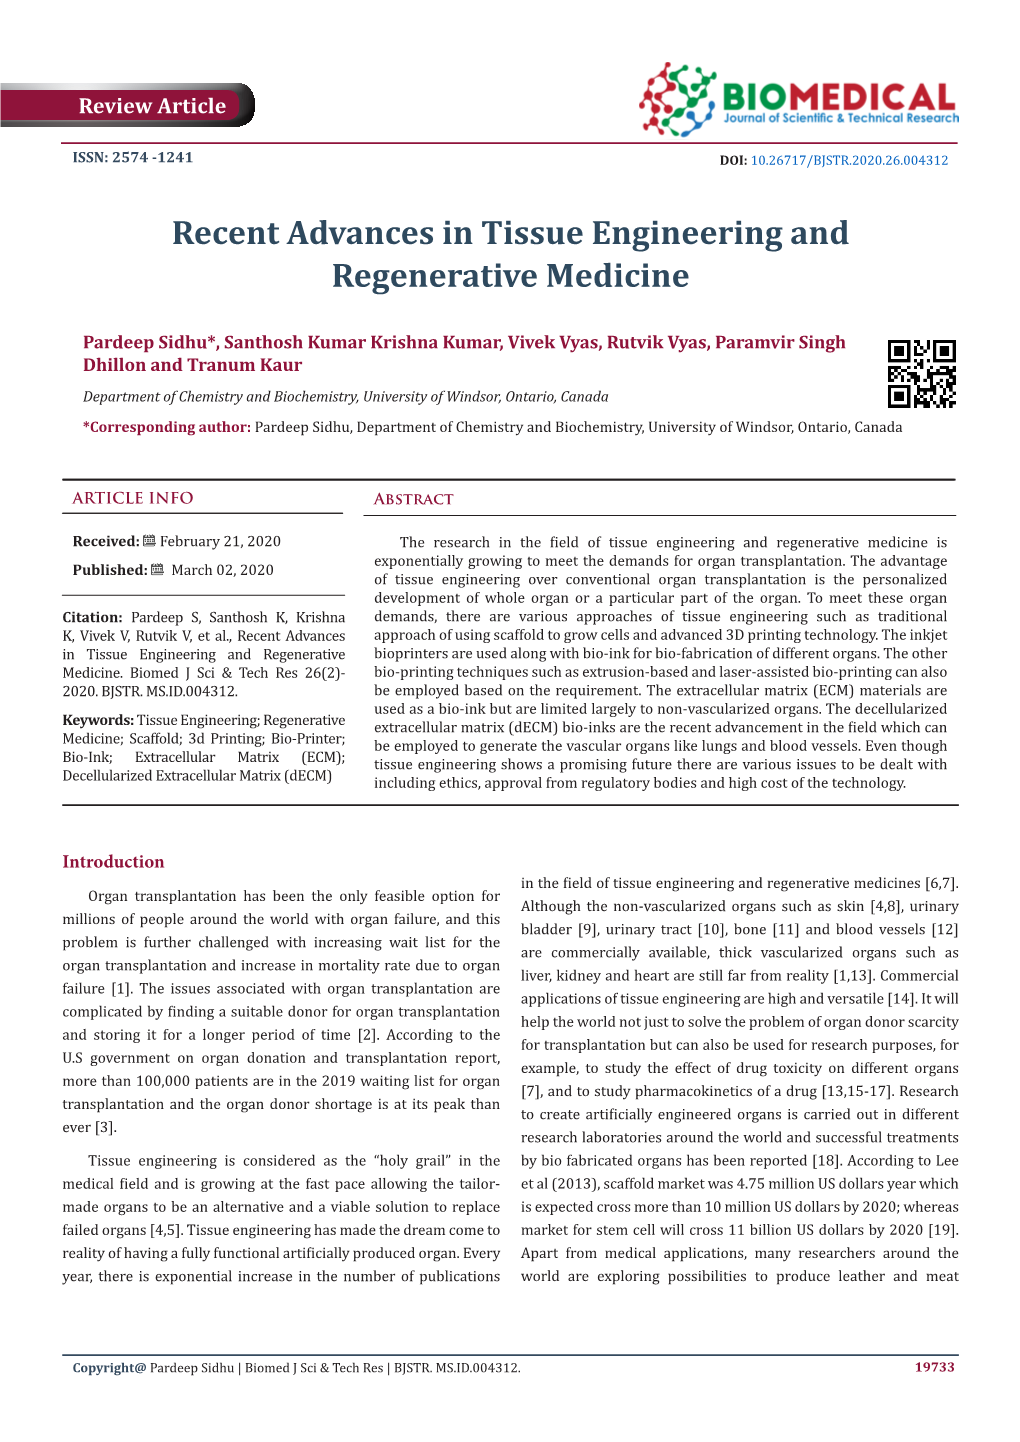 Recent Advances in Tissue Engineering and Regenerative Medicine